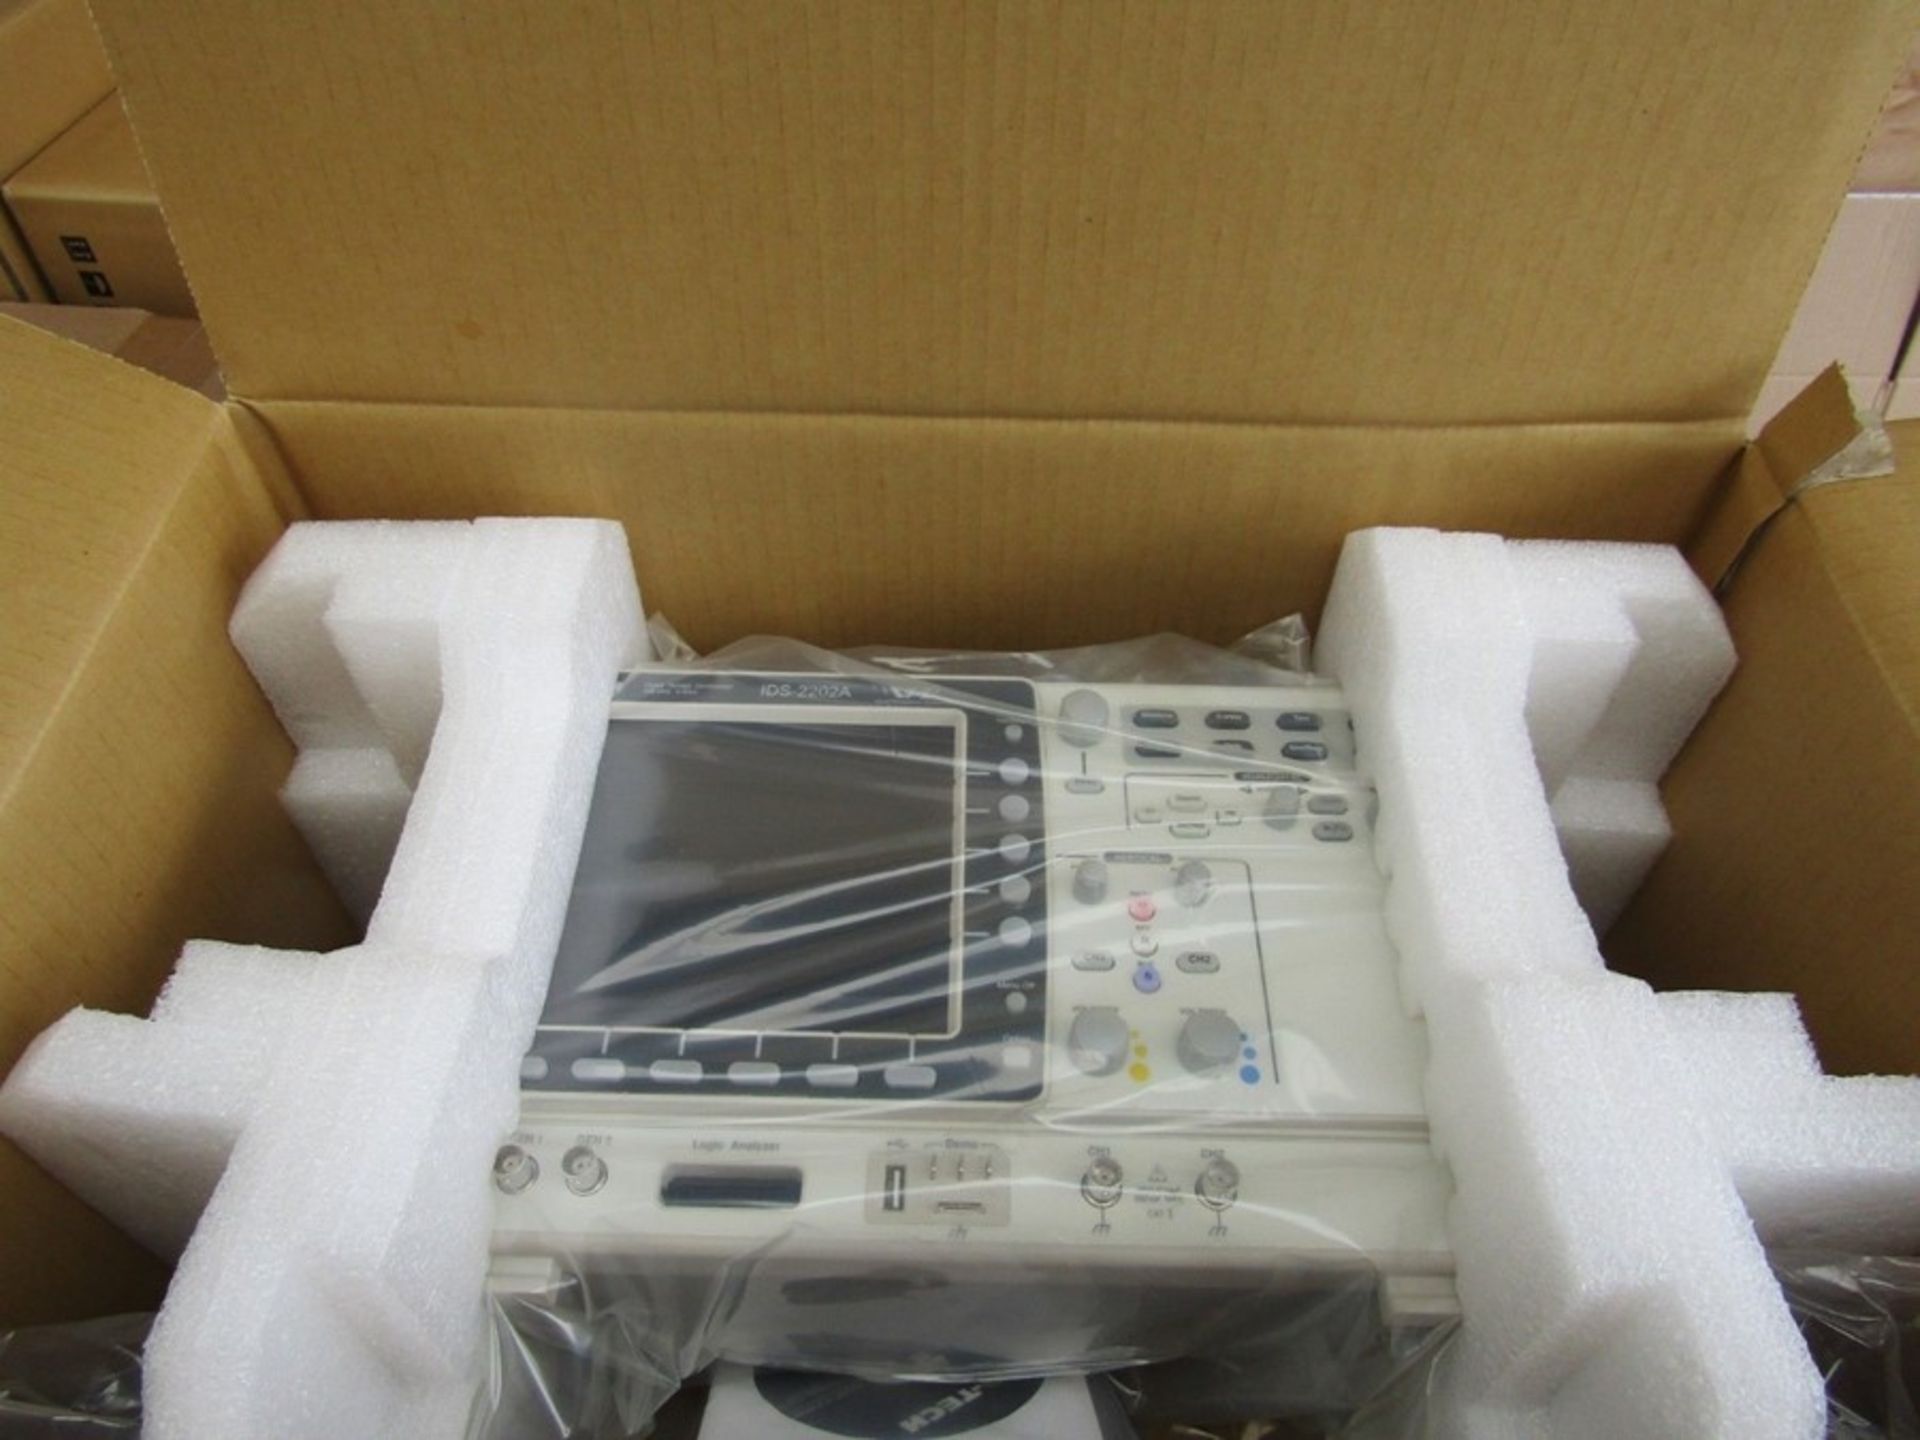 IDS-2202A Digital Oscilloscope, Digital Storage, 2 Channels, 200MHz, ISO-TECH IDS2000A Series